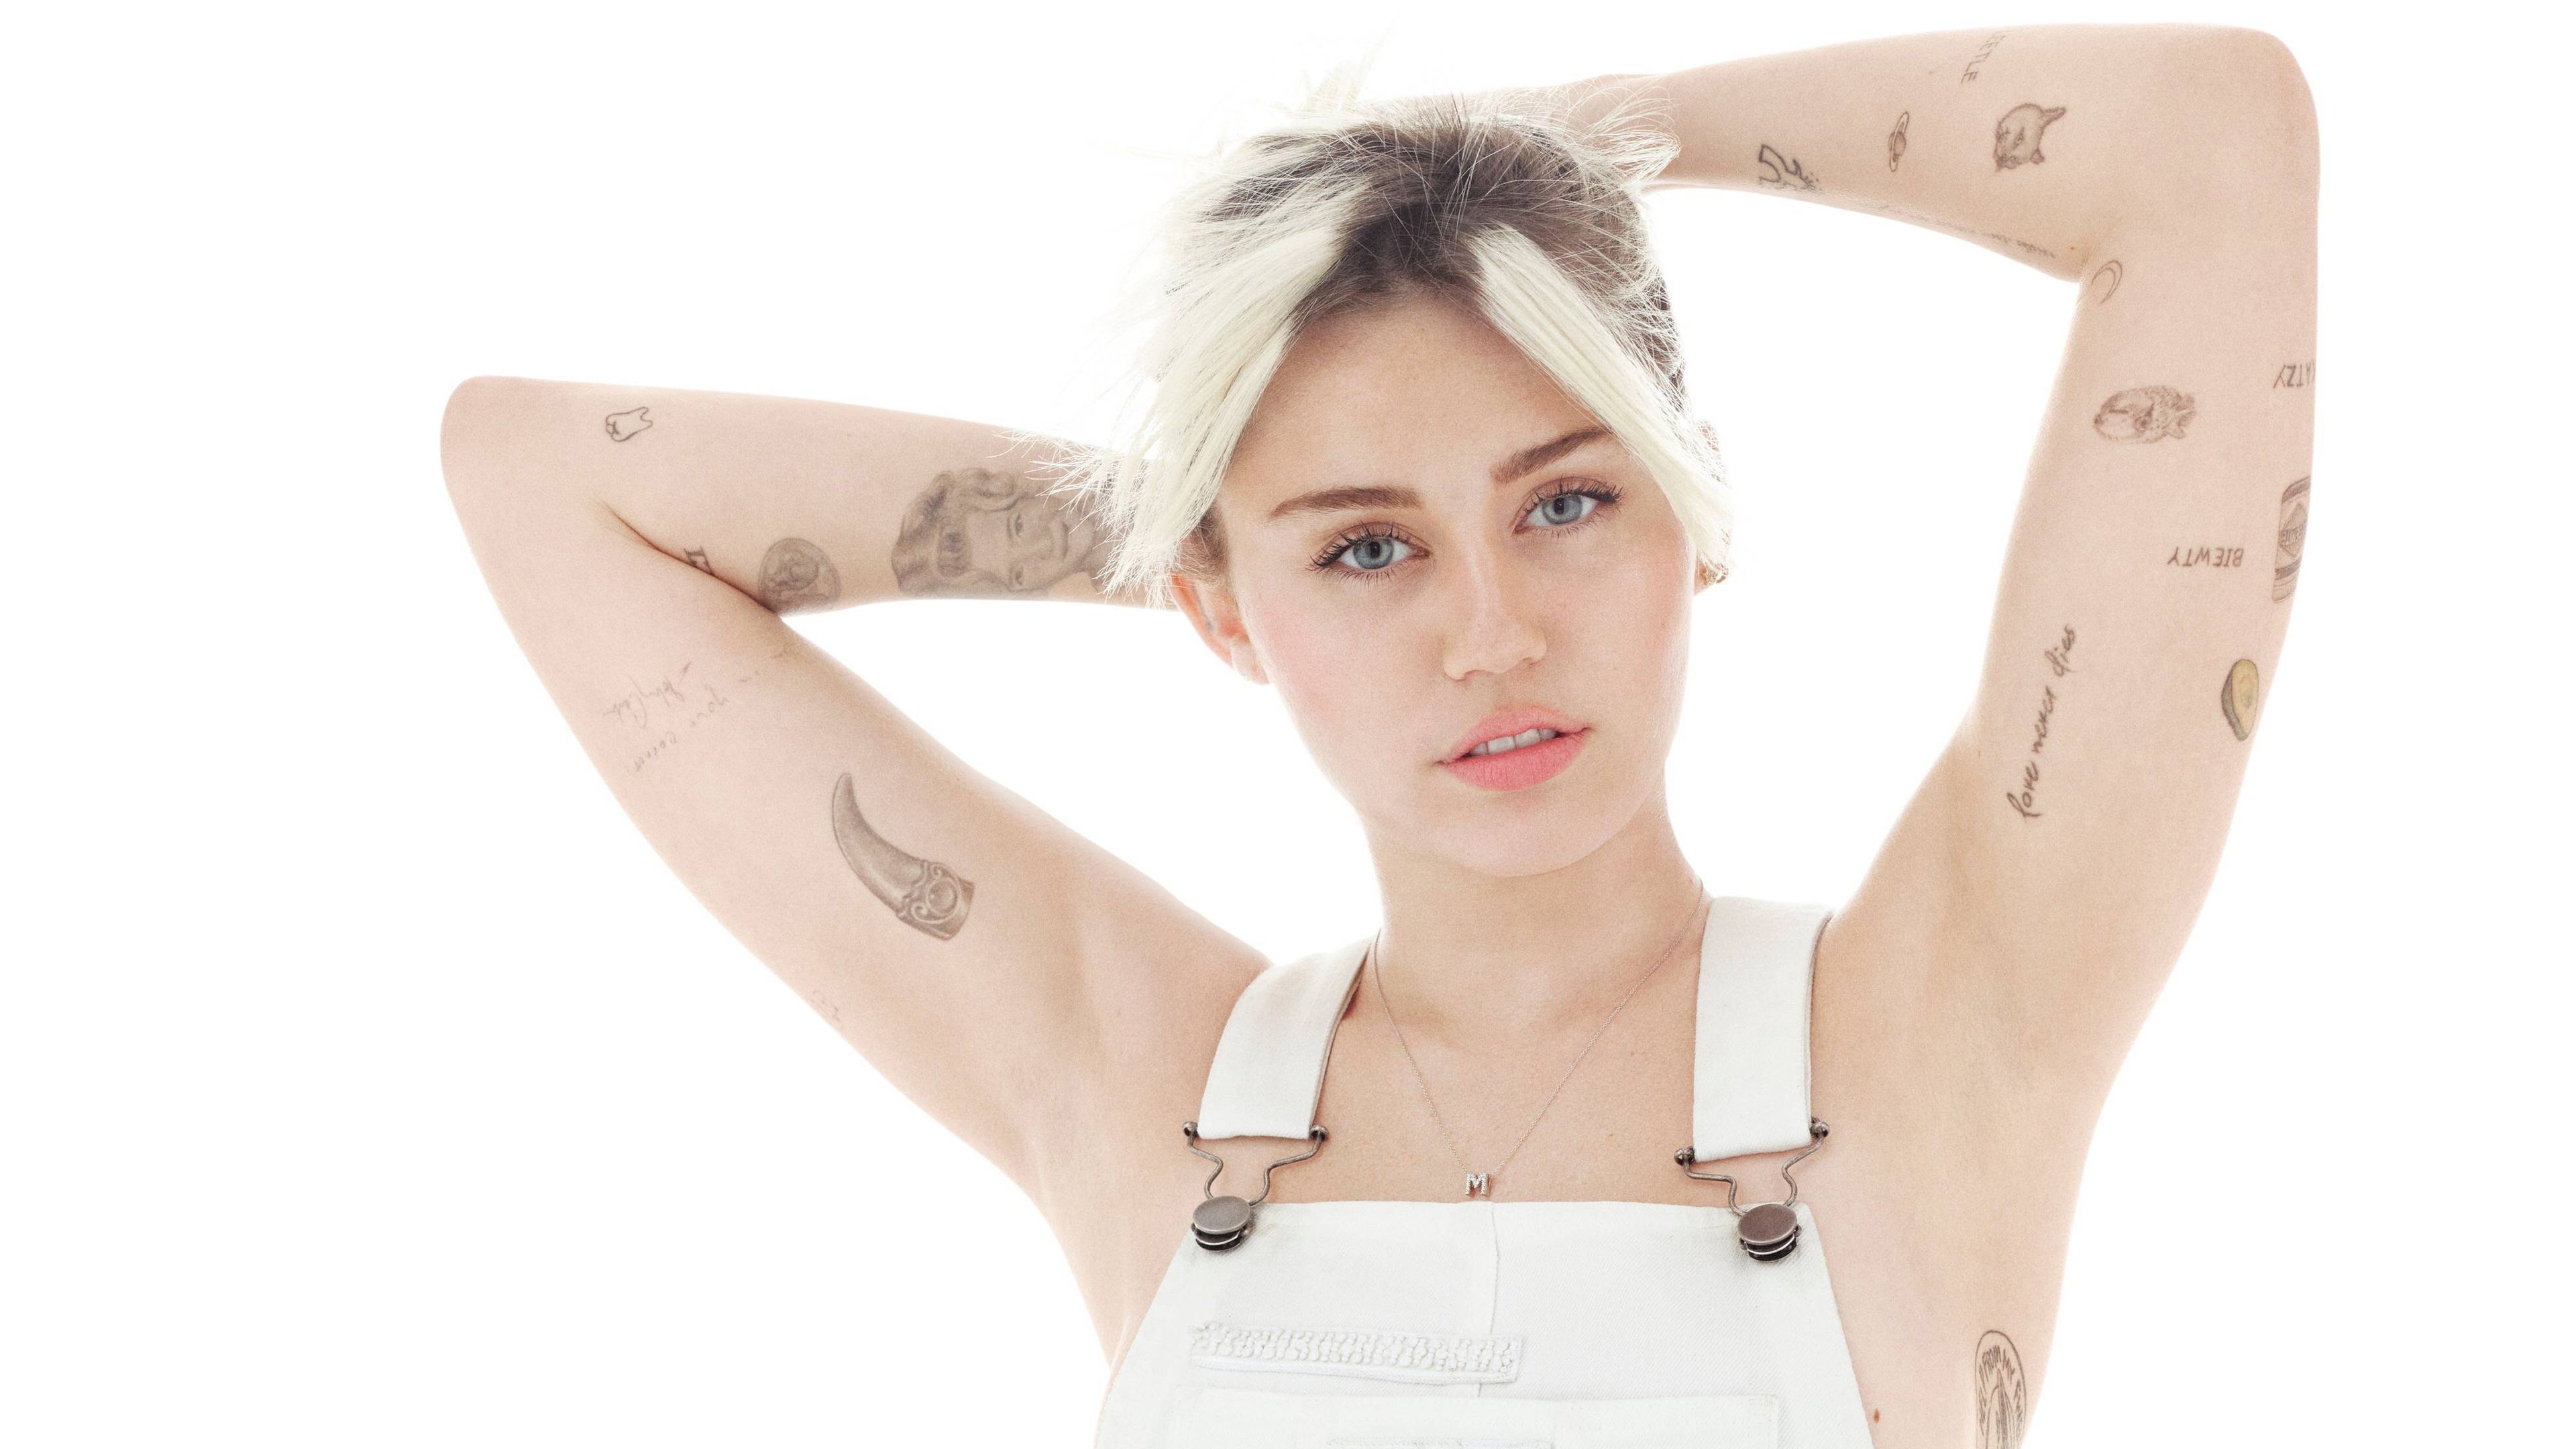 Wallpaper 4k Miley Cyrus 2019 4k New 4k Wallpaper, Celebrities Wallpaper, Girls Wallpaper, Hd Wallpaper, Miley Cyrus Wallpaper, Music Wallpaper